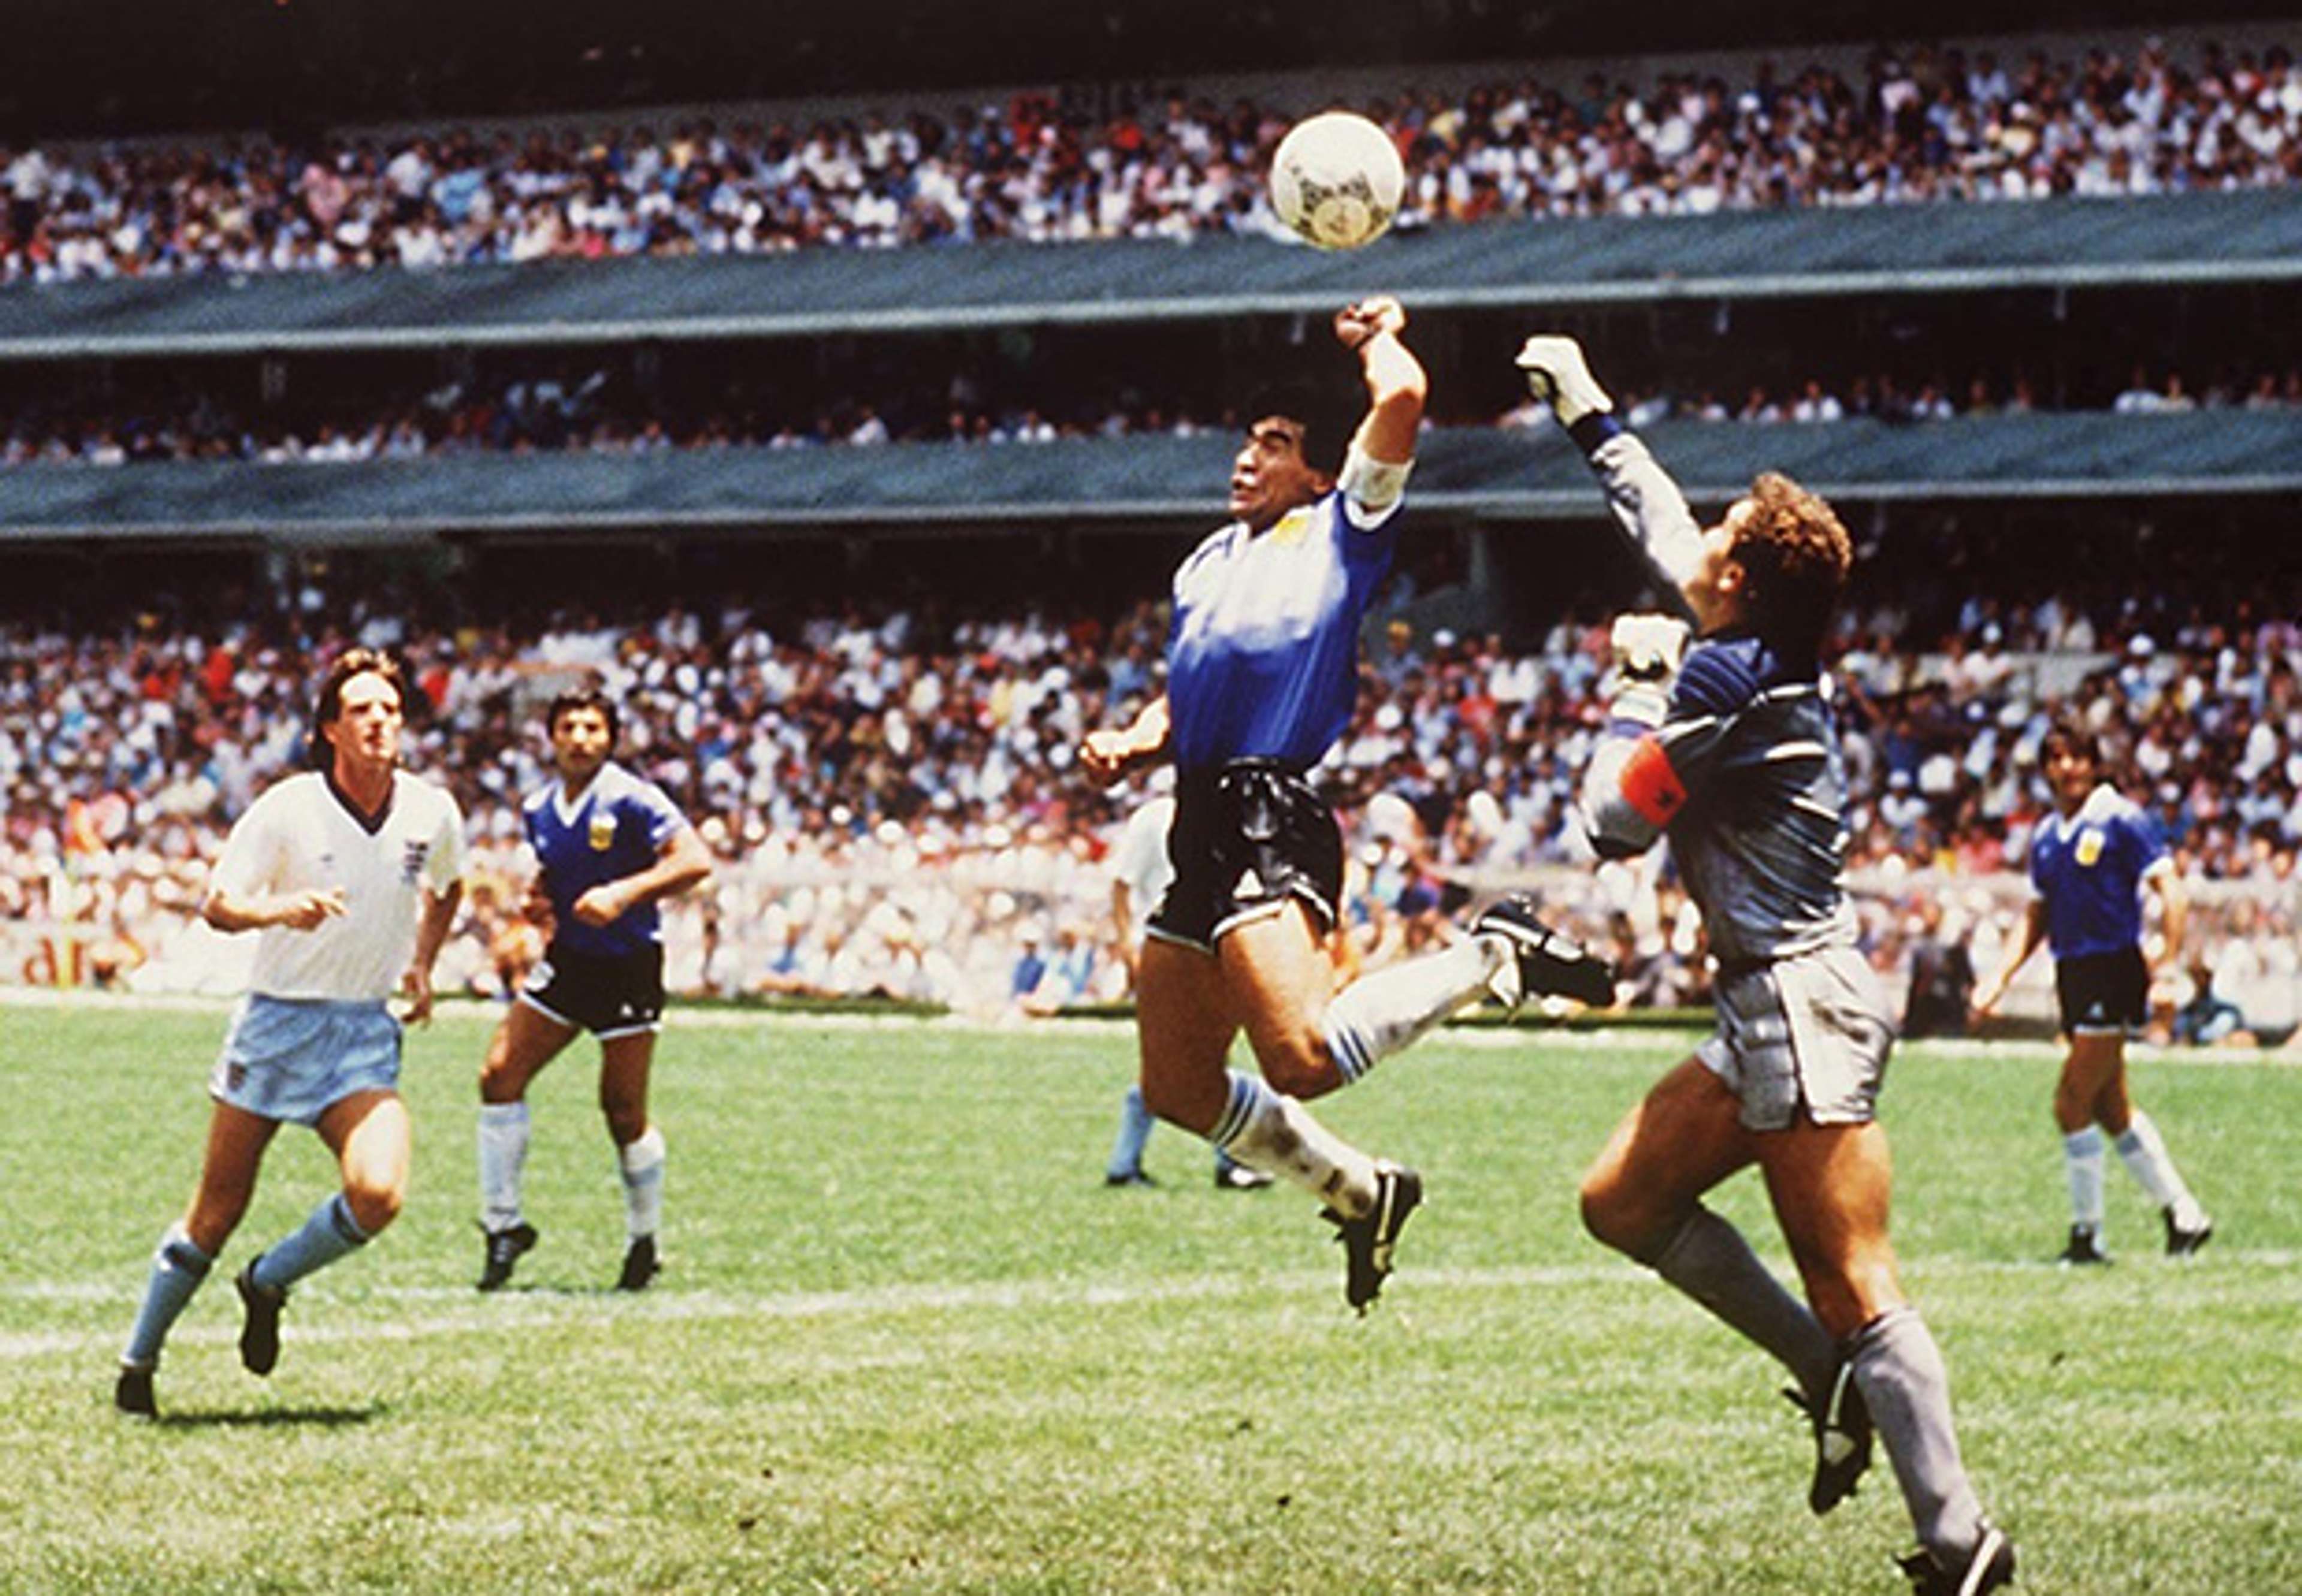 Diego Maradona Hand of God World Cup 1986